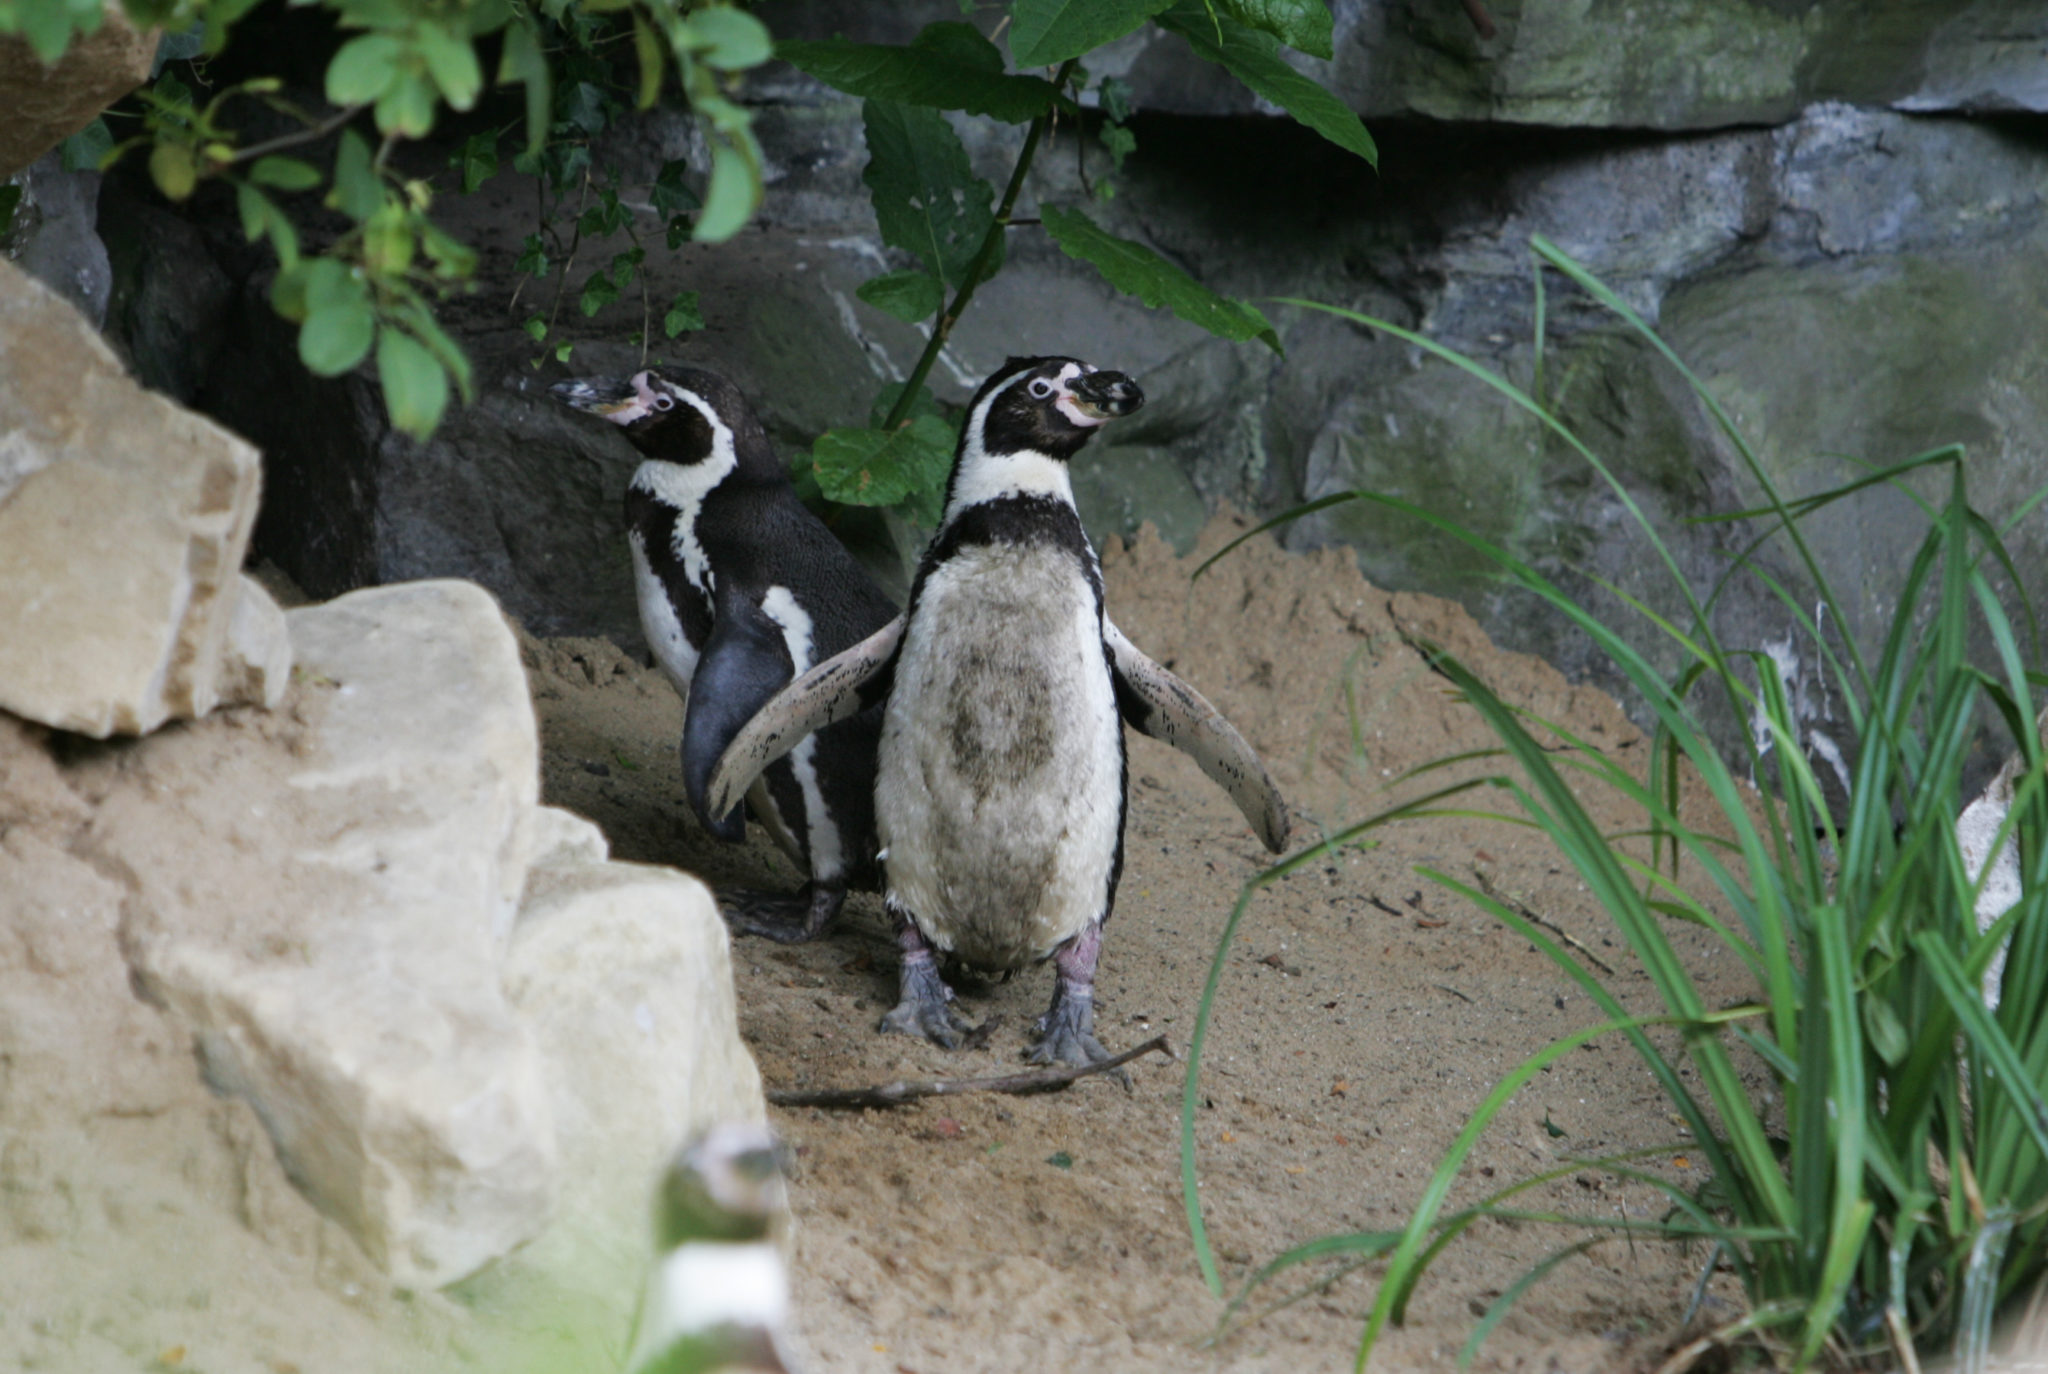 Penguins at Dublin Zoo